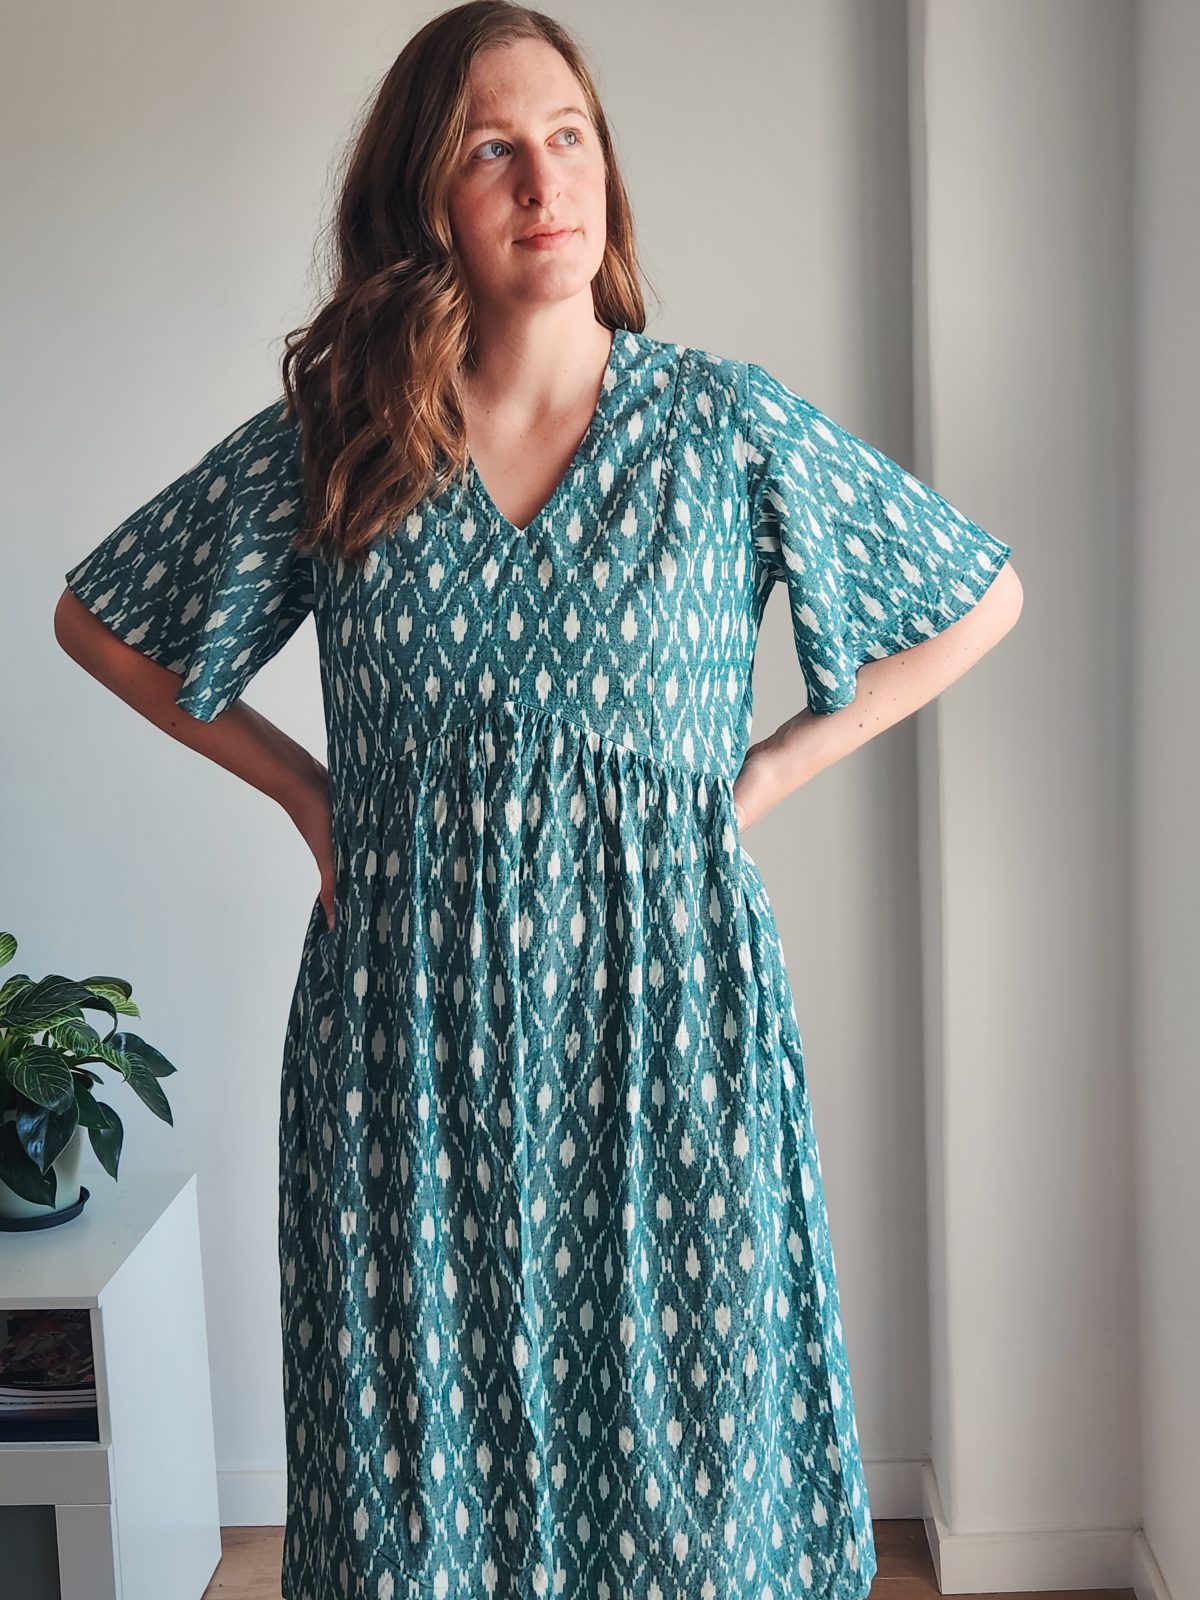 Elbe Textiles – Duplantier Dress (Low Bust Adjustment Tutorial)